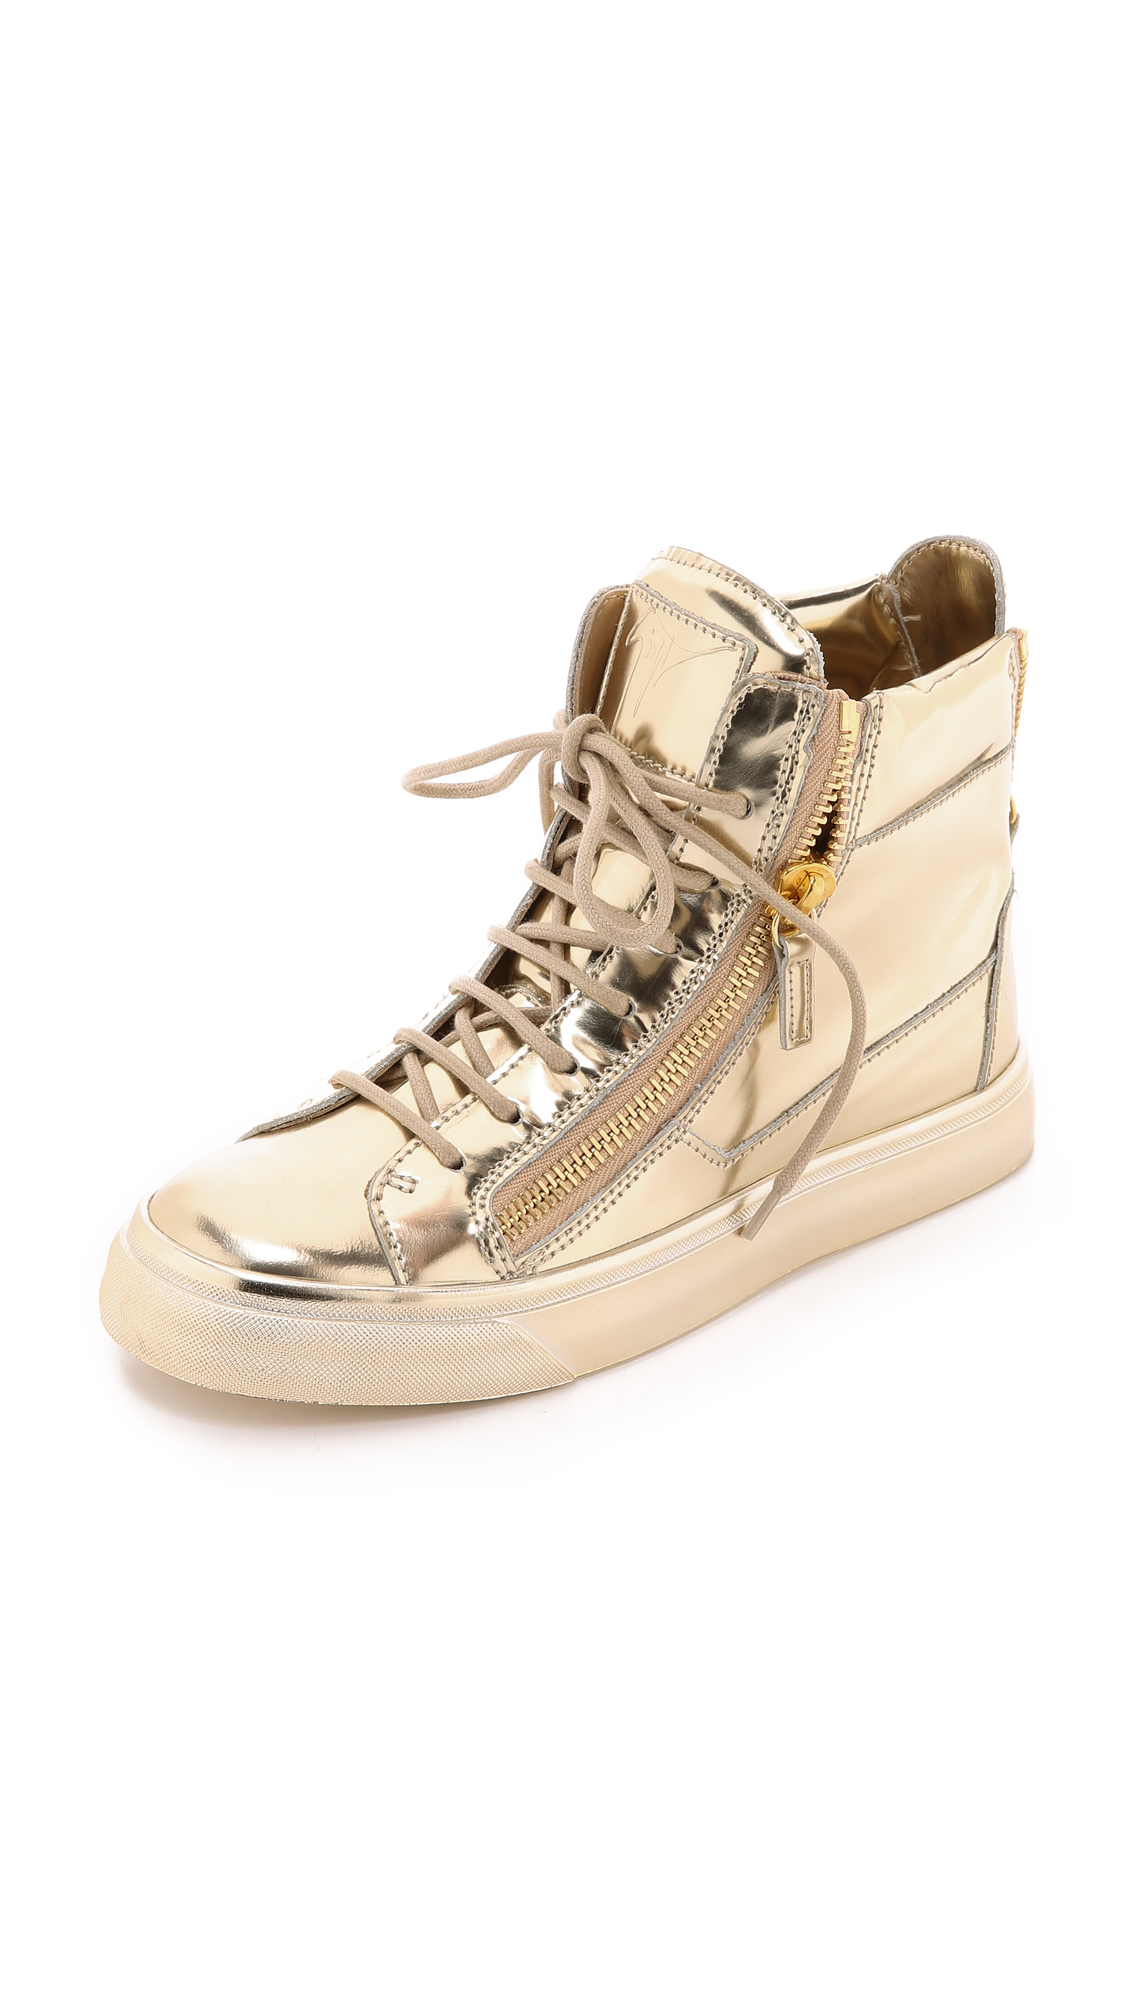 Giuseppe Zanotti Leather Sneakers in Metallic - Lyst